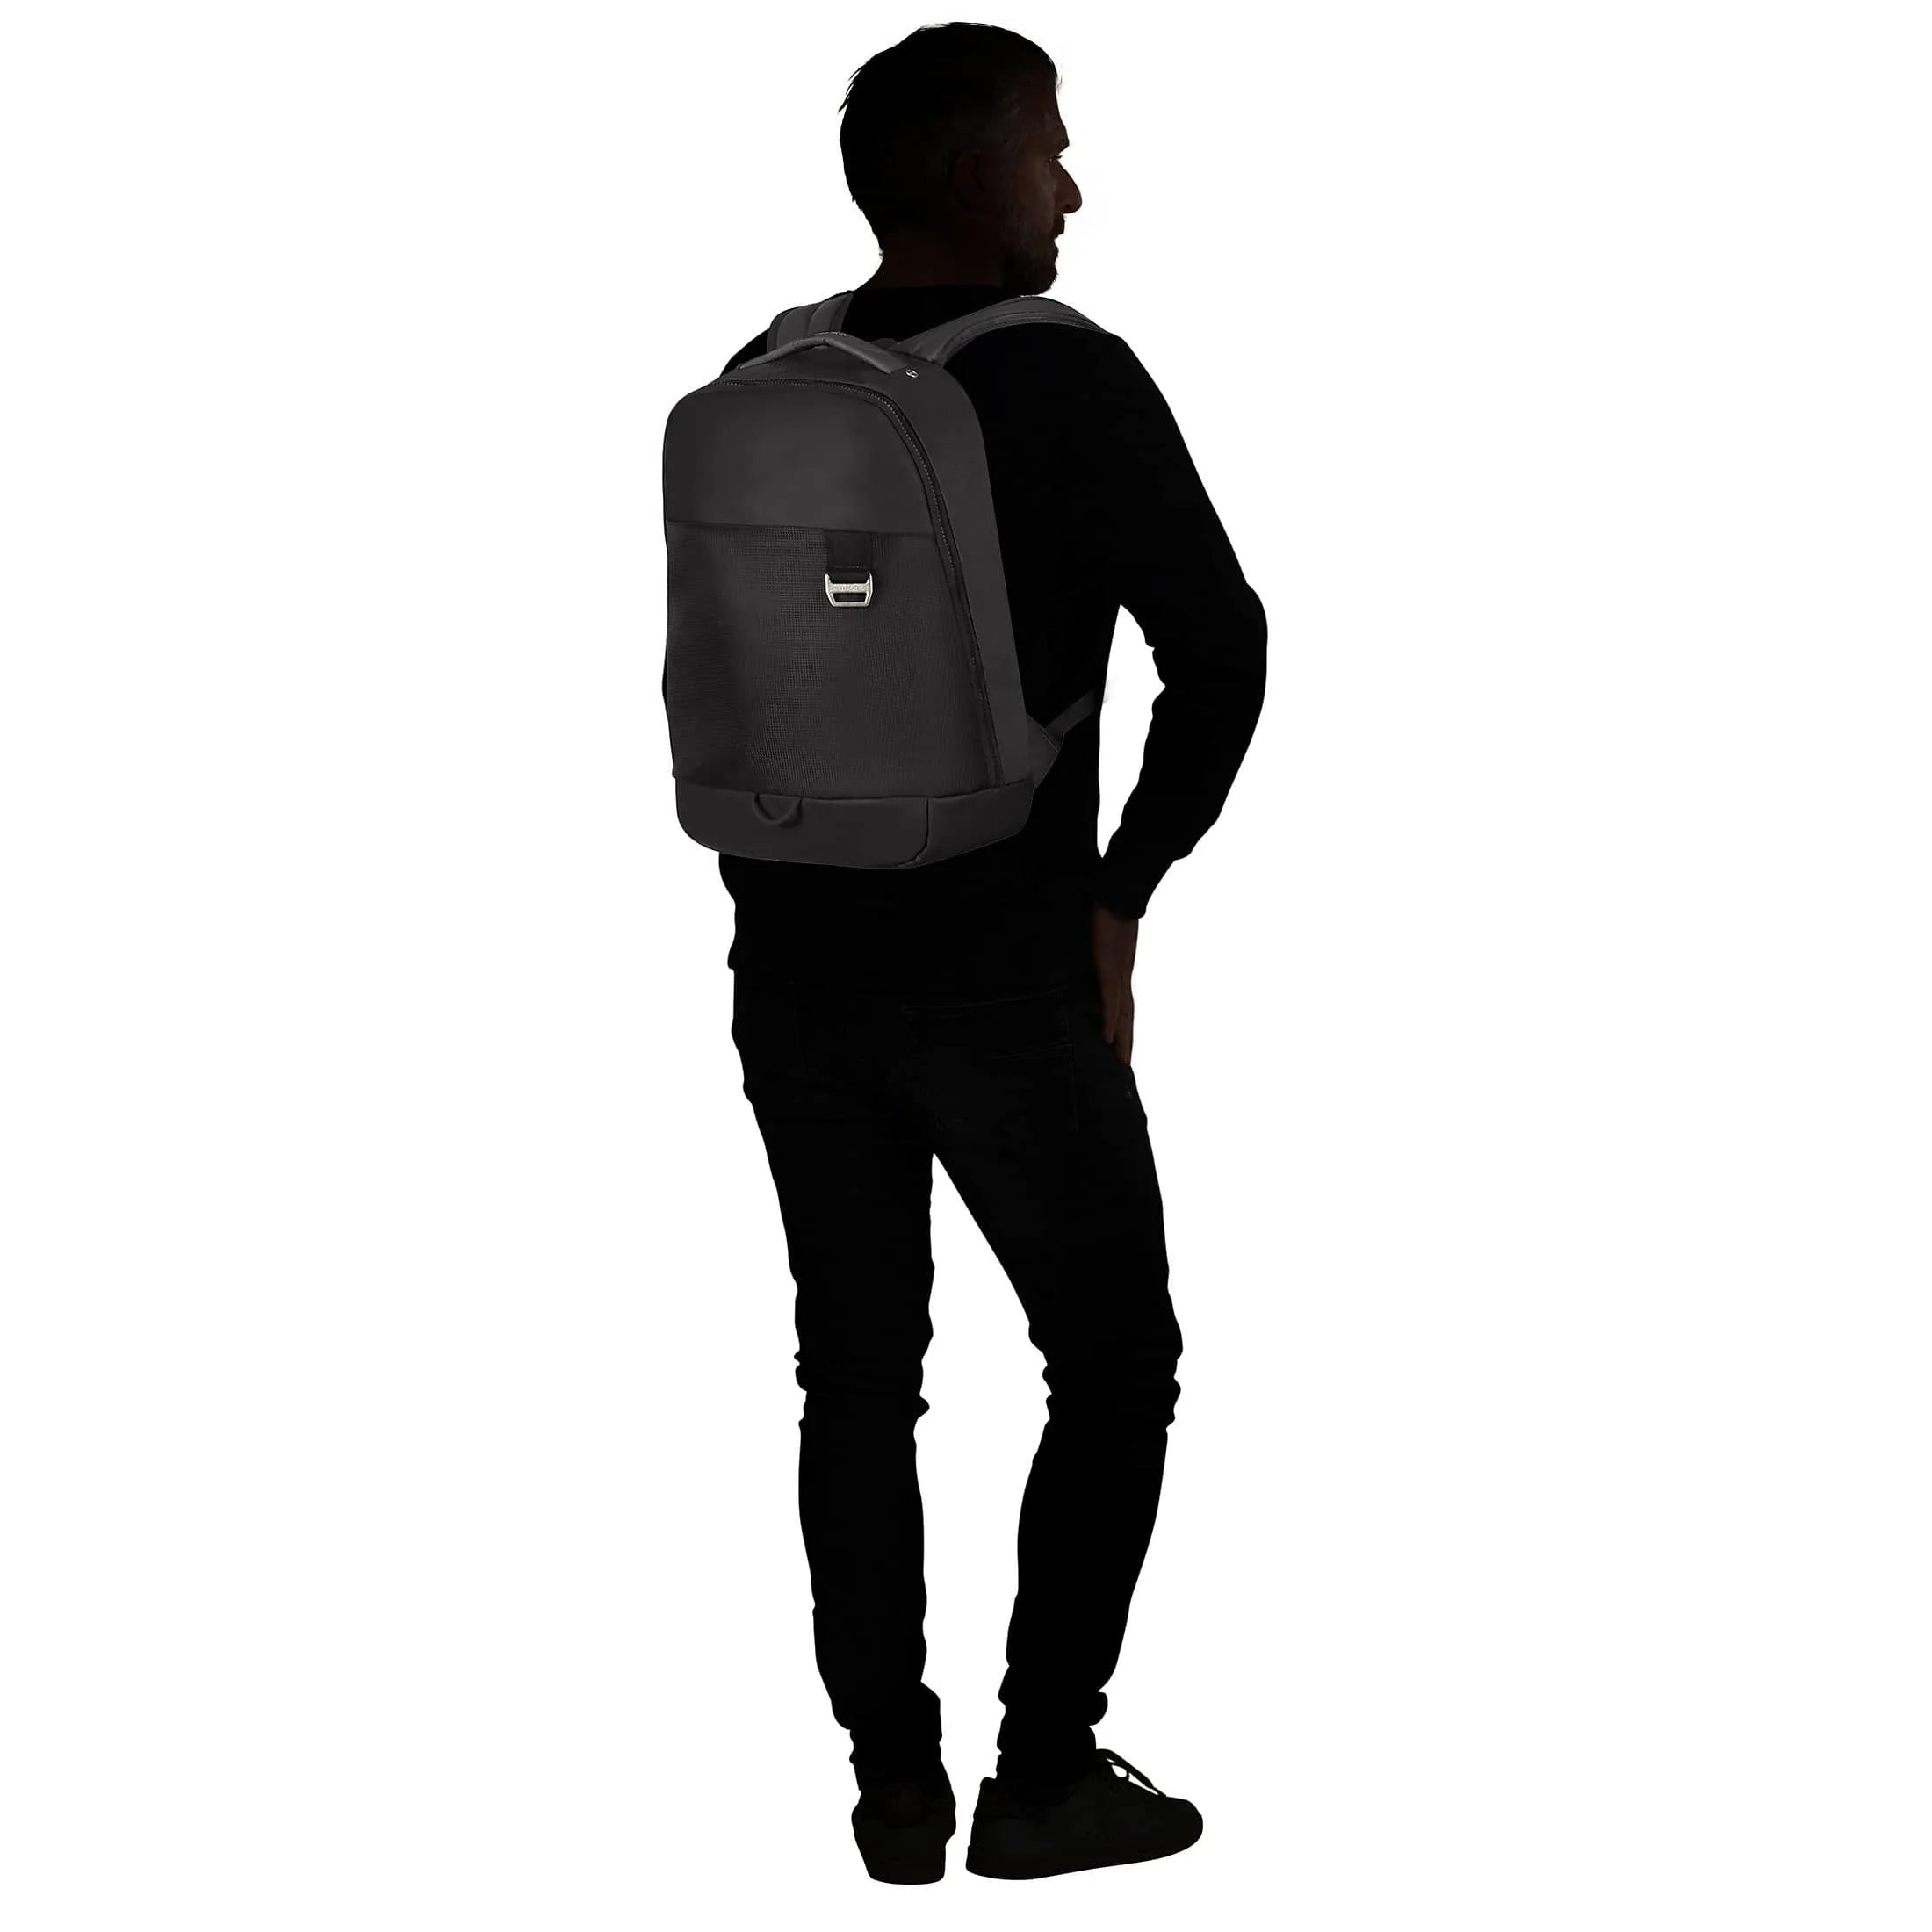 Samsonite Midtown Laptop Backpack S 41 cm - Camo Grey